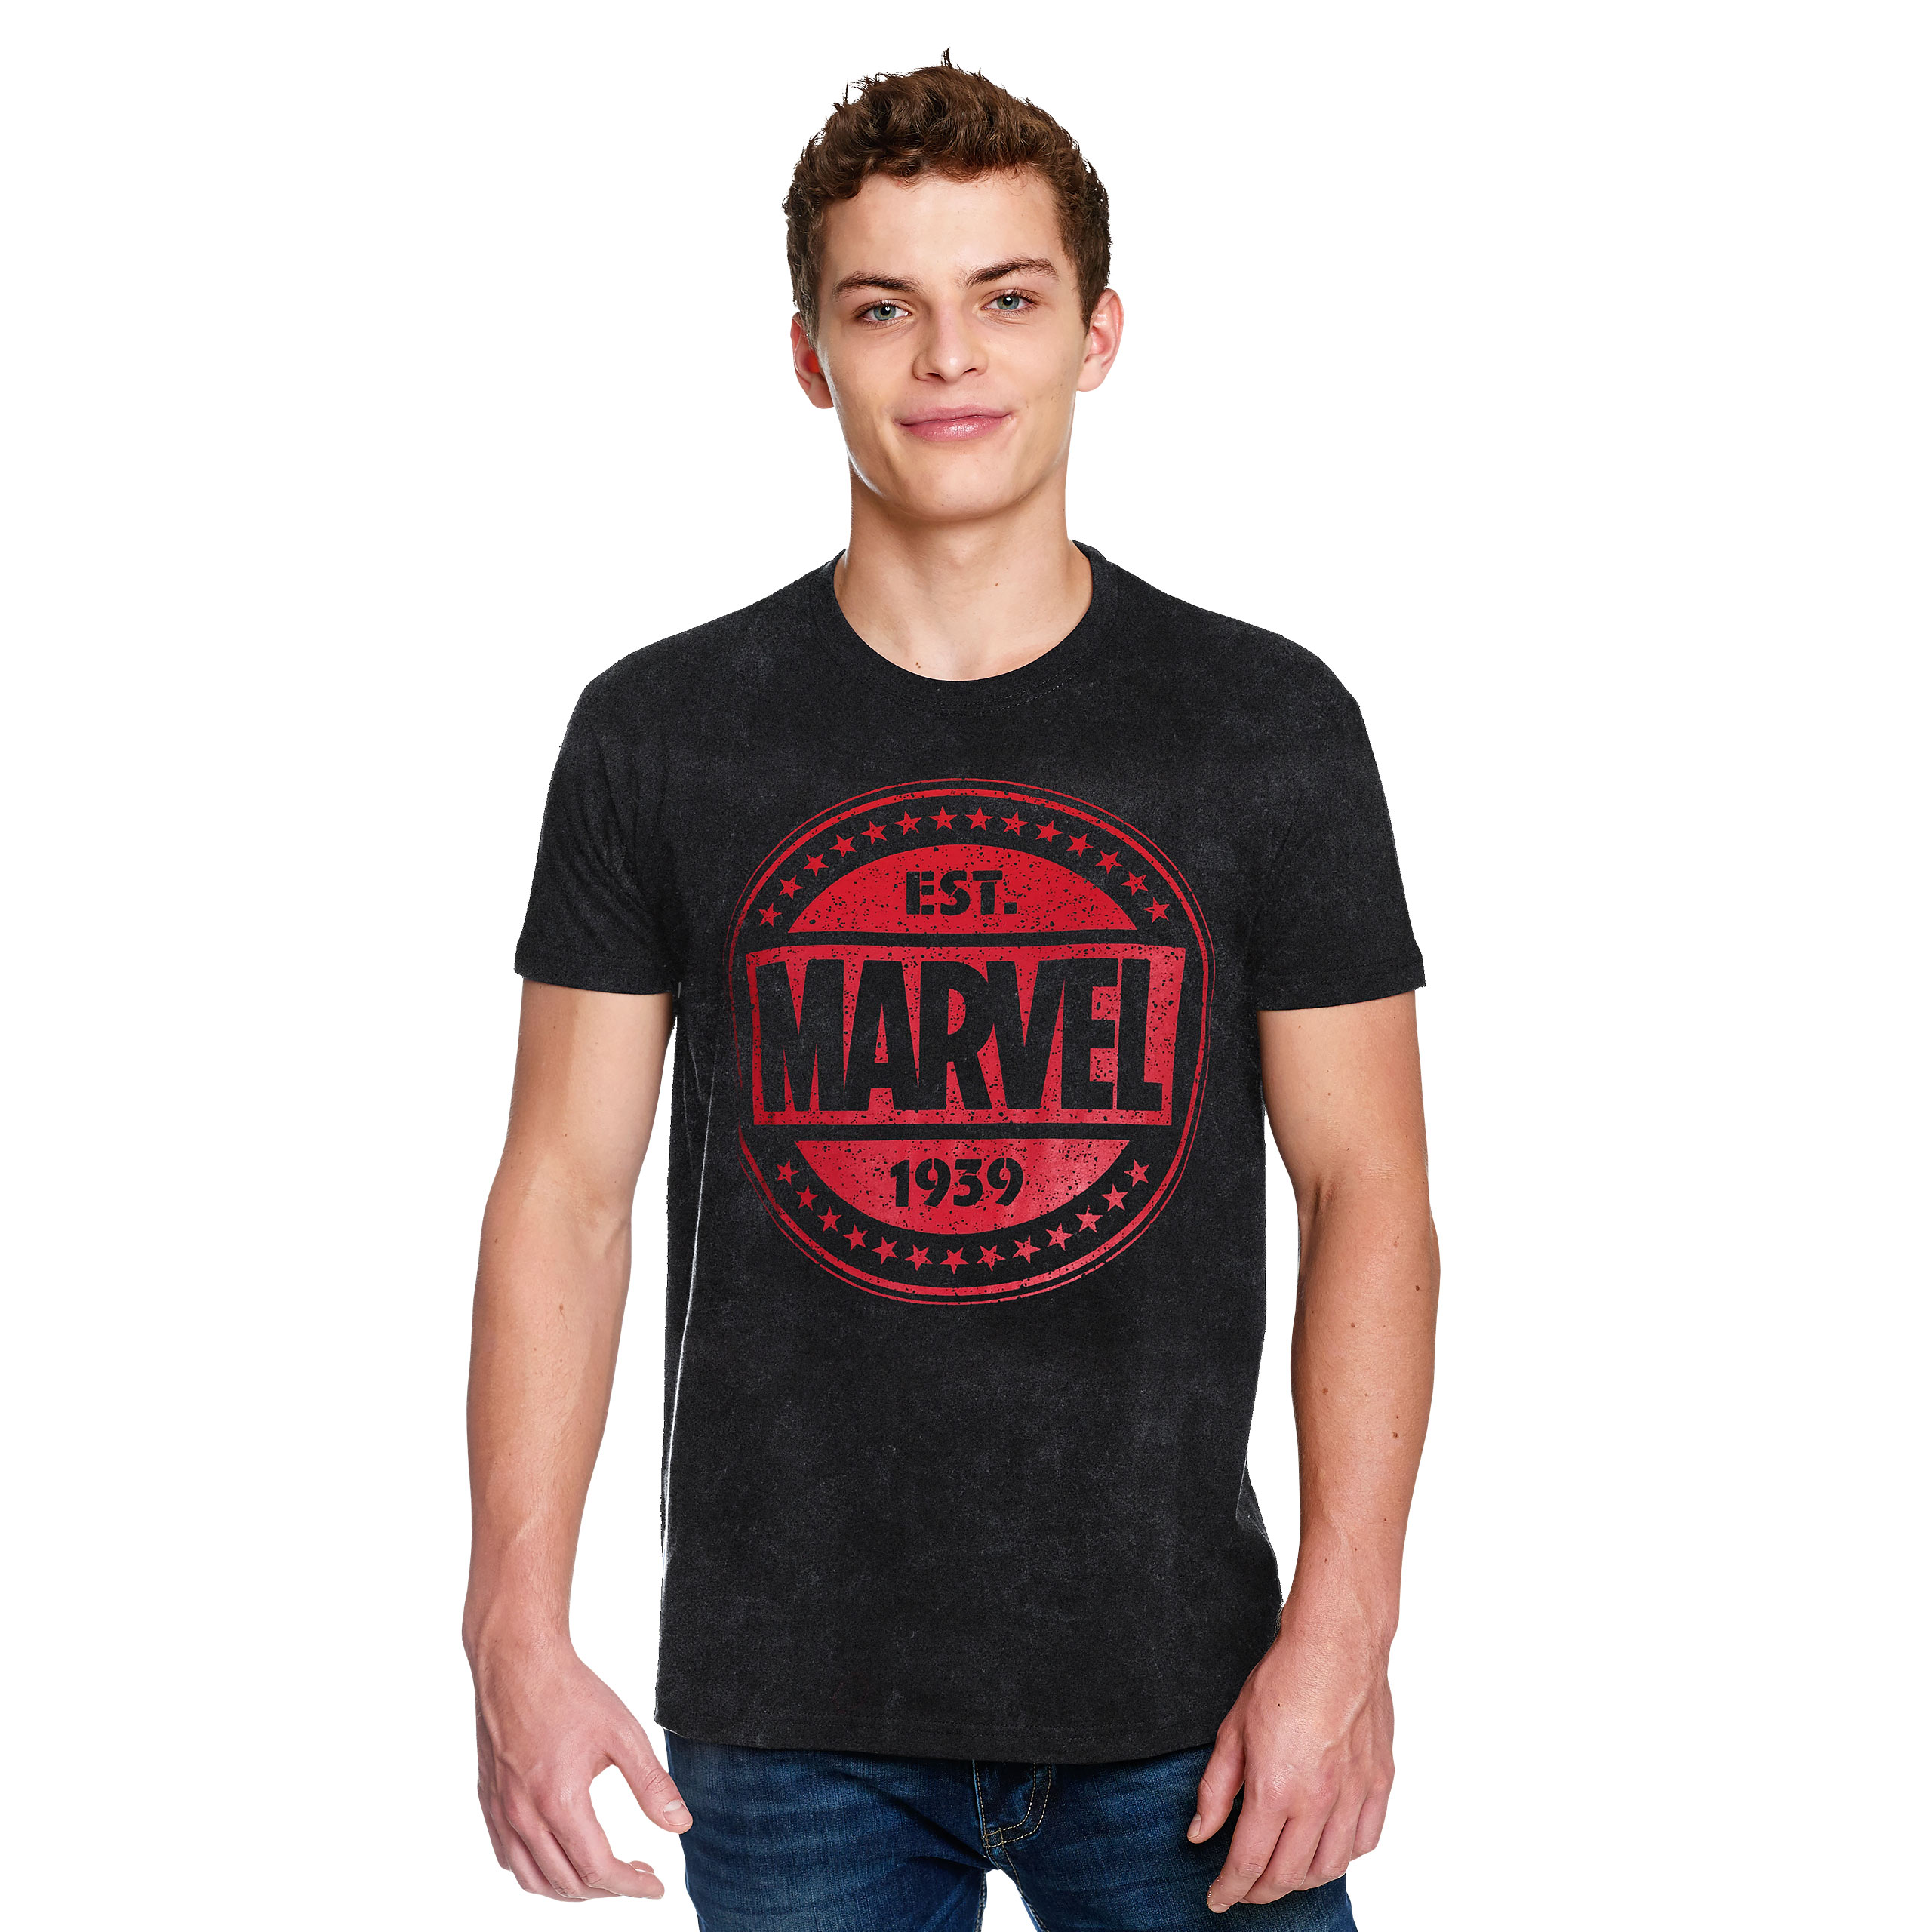 Marvel 1939 T-Shirt black